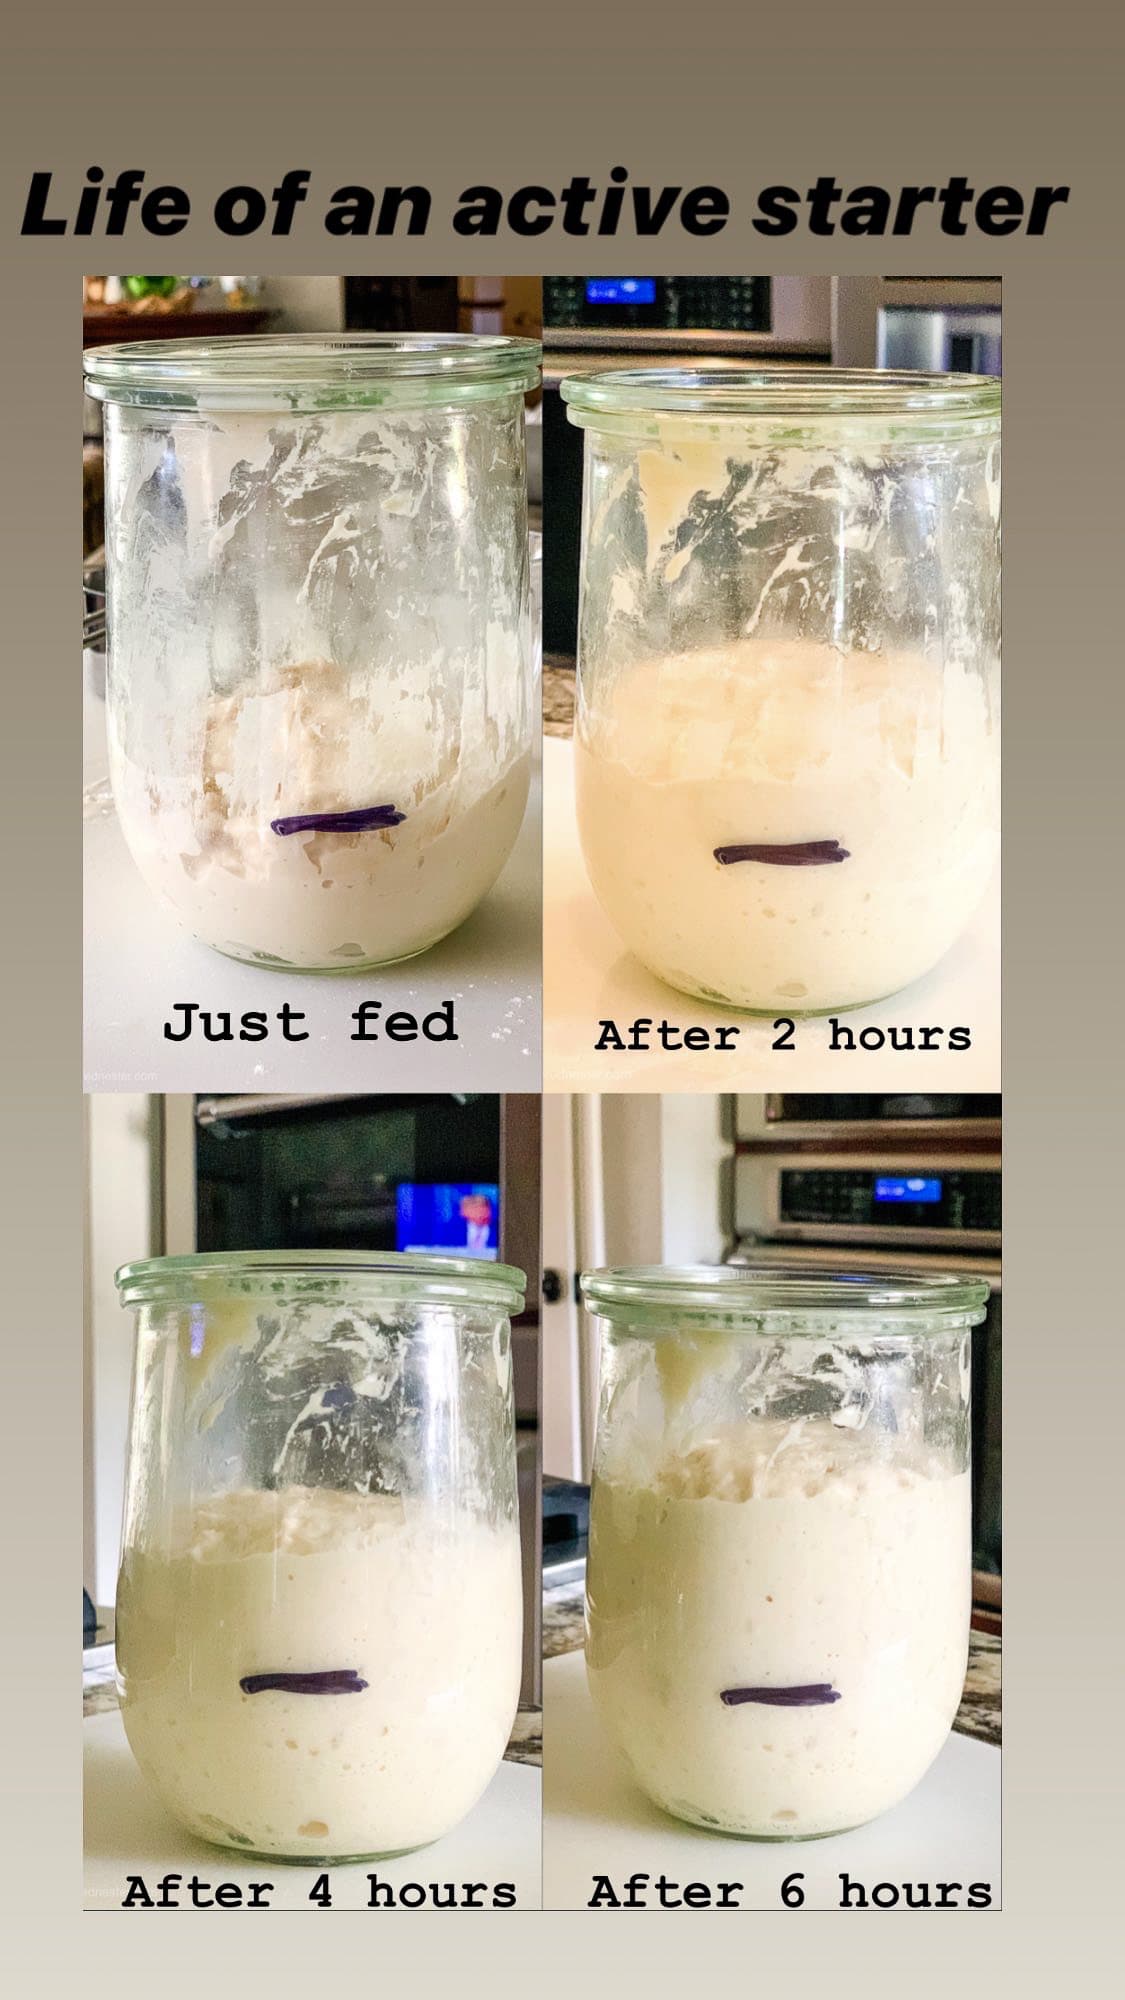 Images of a sourdough starter just fed, after 2 hours, after 4 hours, and after 6 hours.